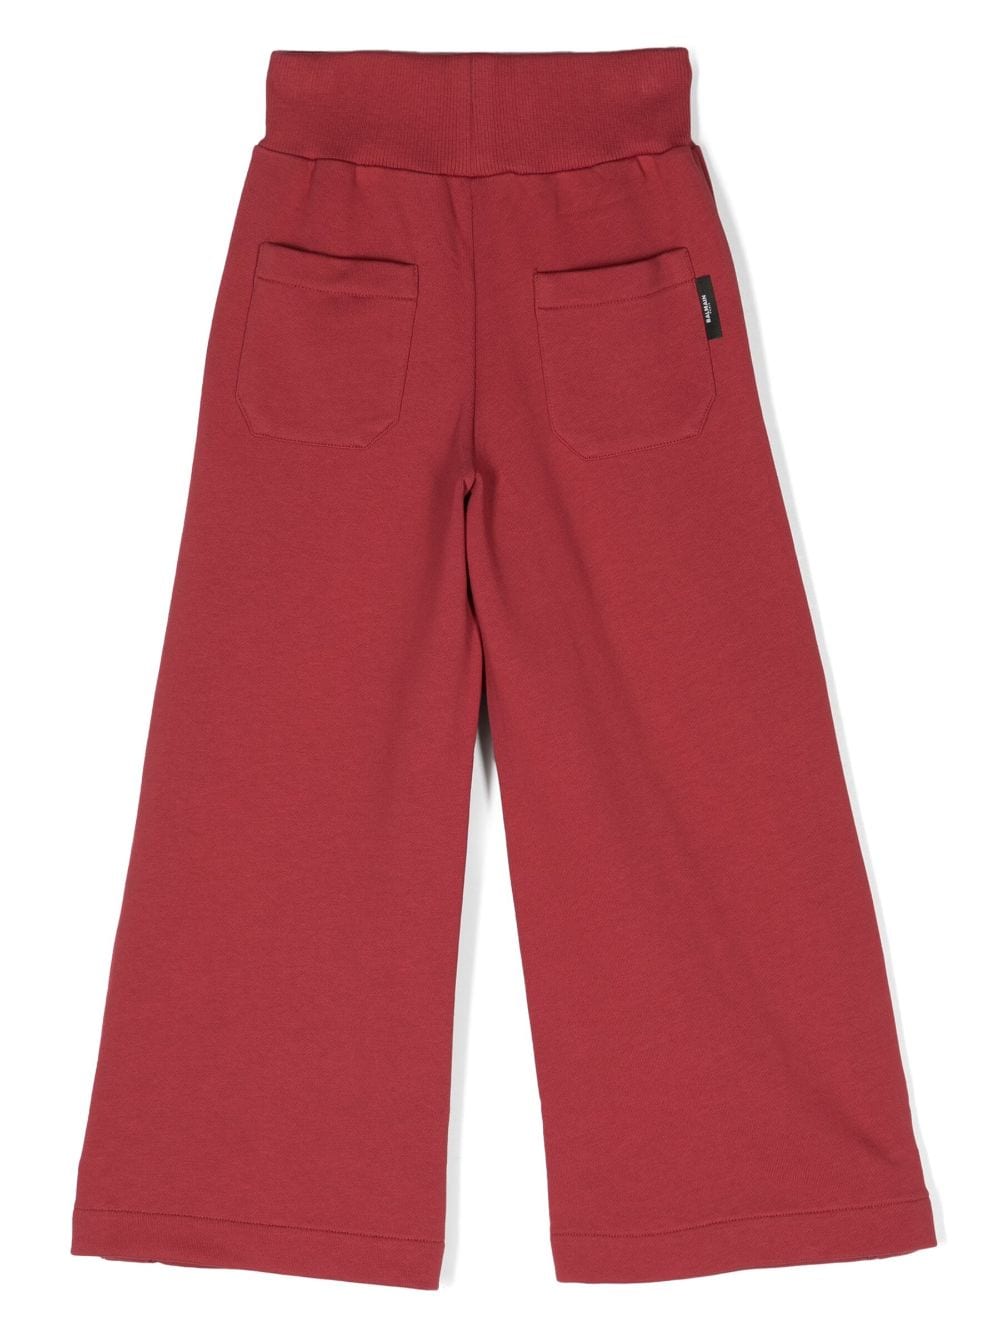 Pantalone rosso per bambina